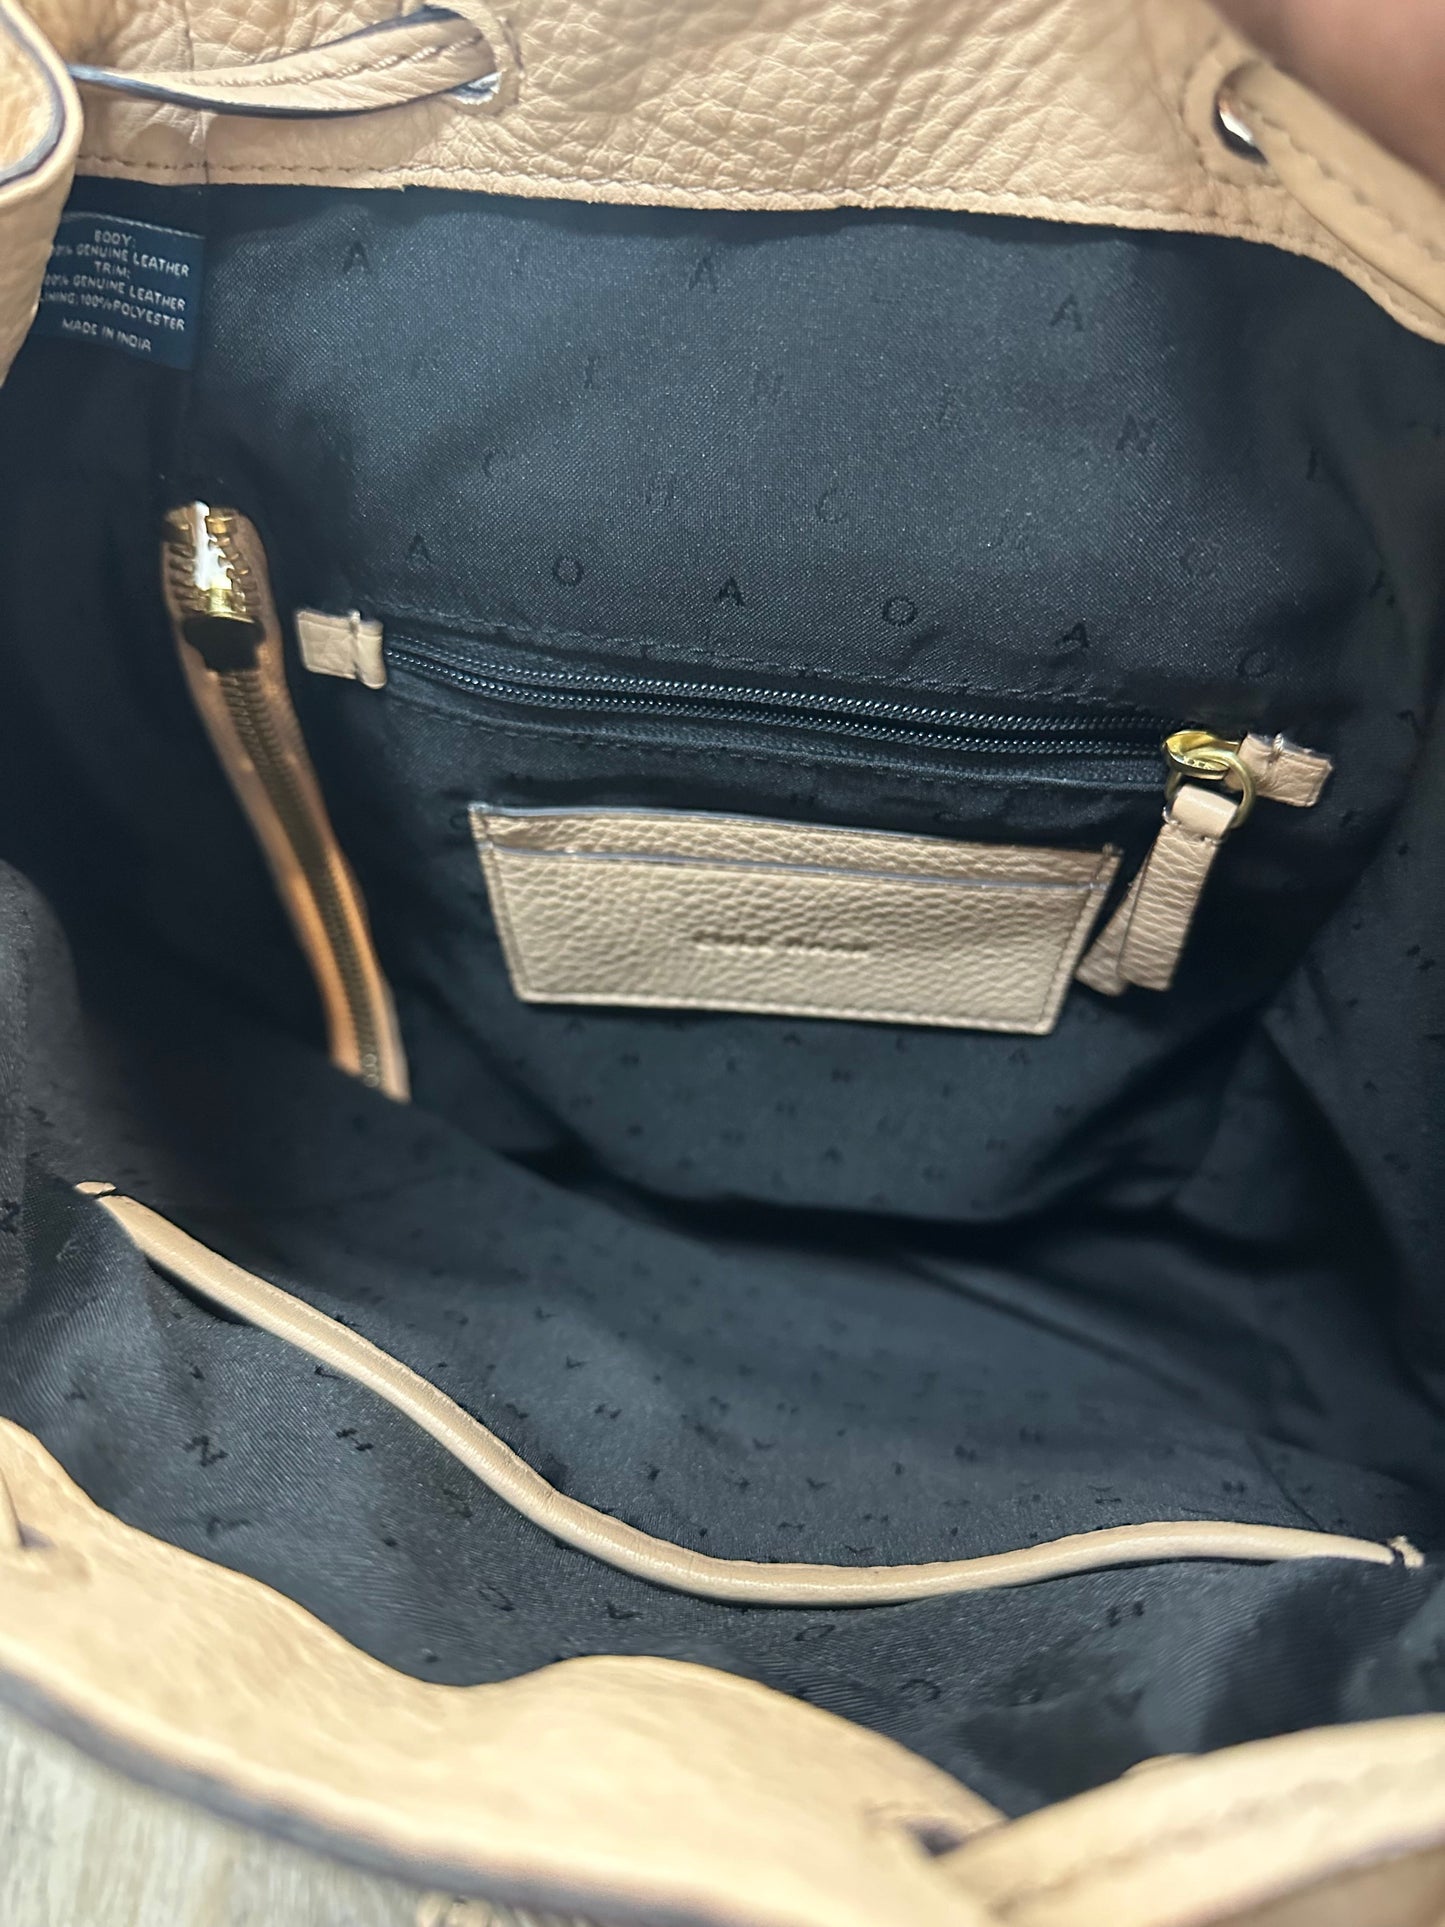 Backpack Designer Cole-haan, Size Medium